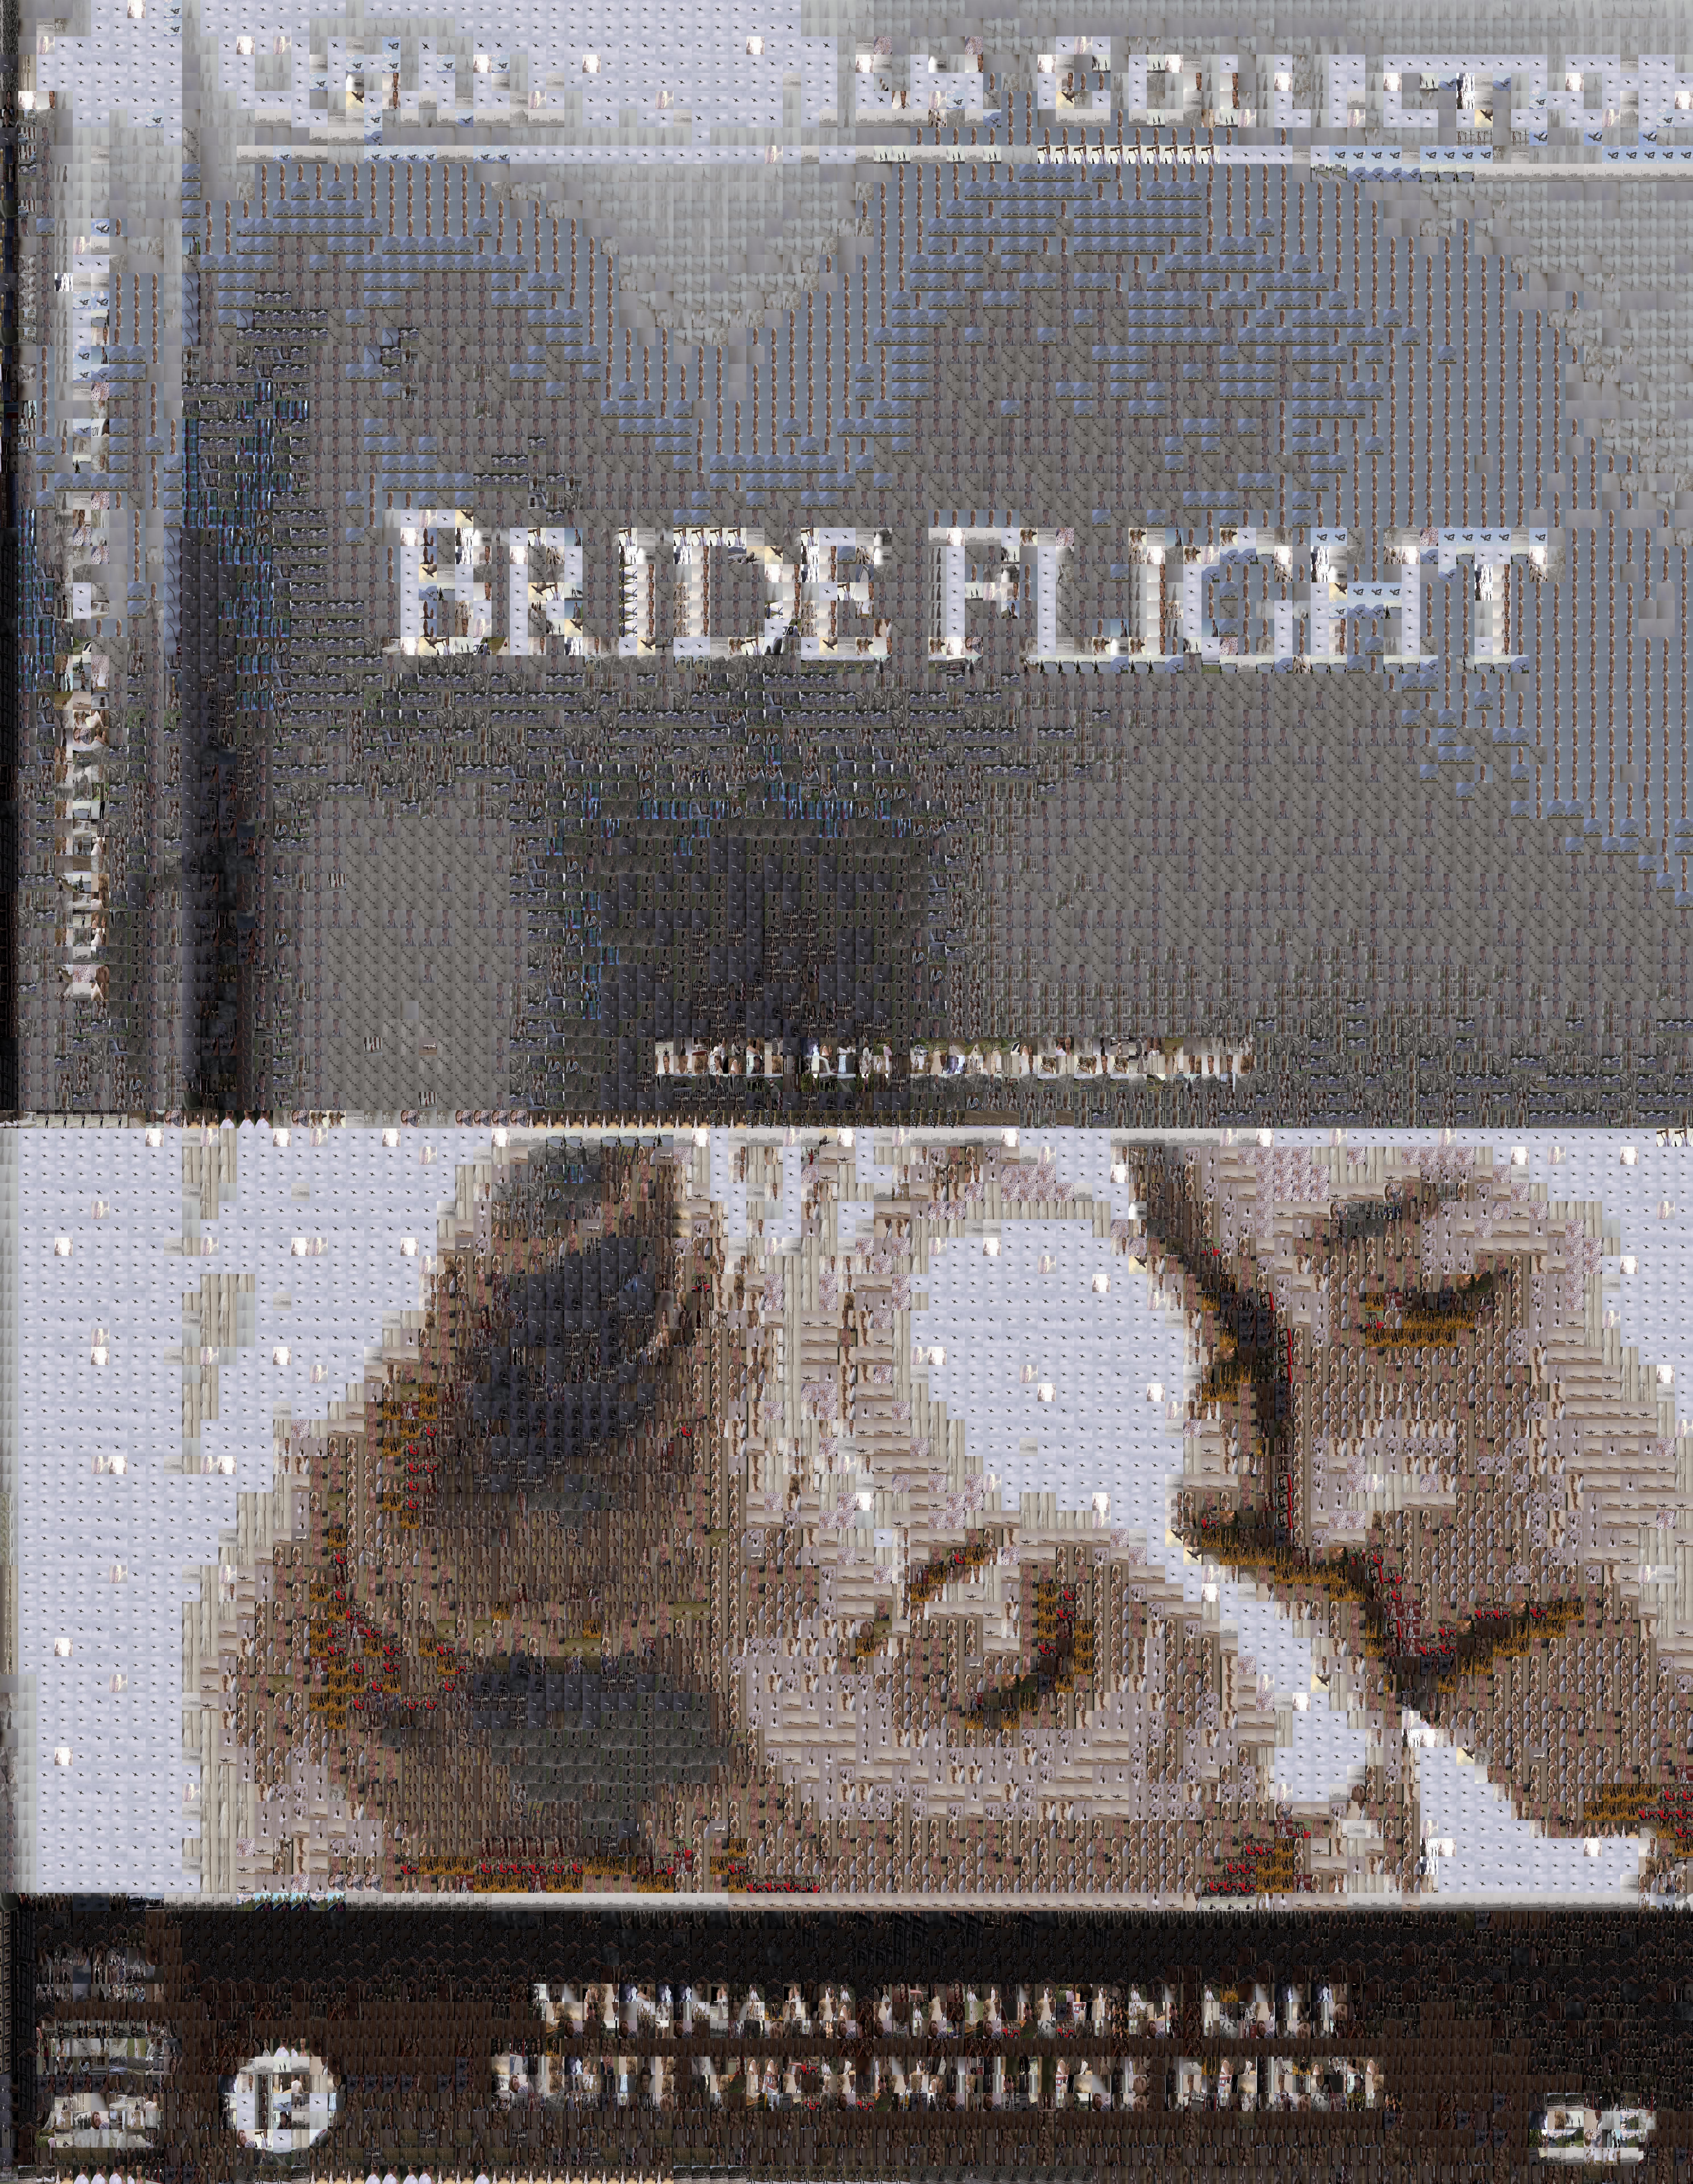 bride-flight